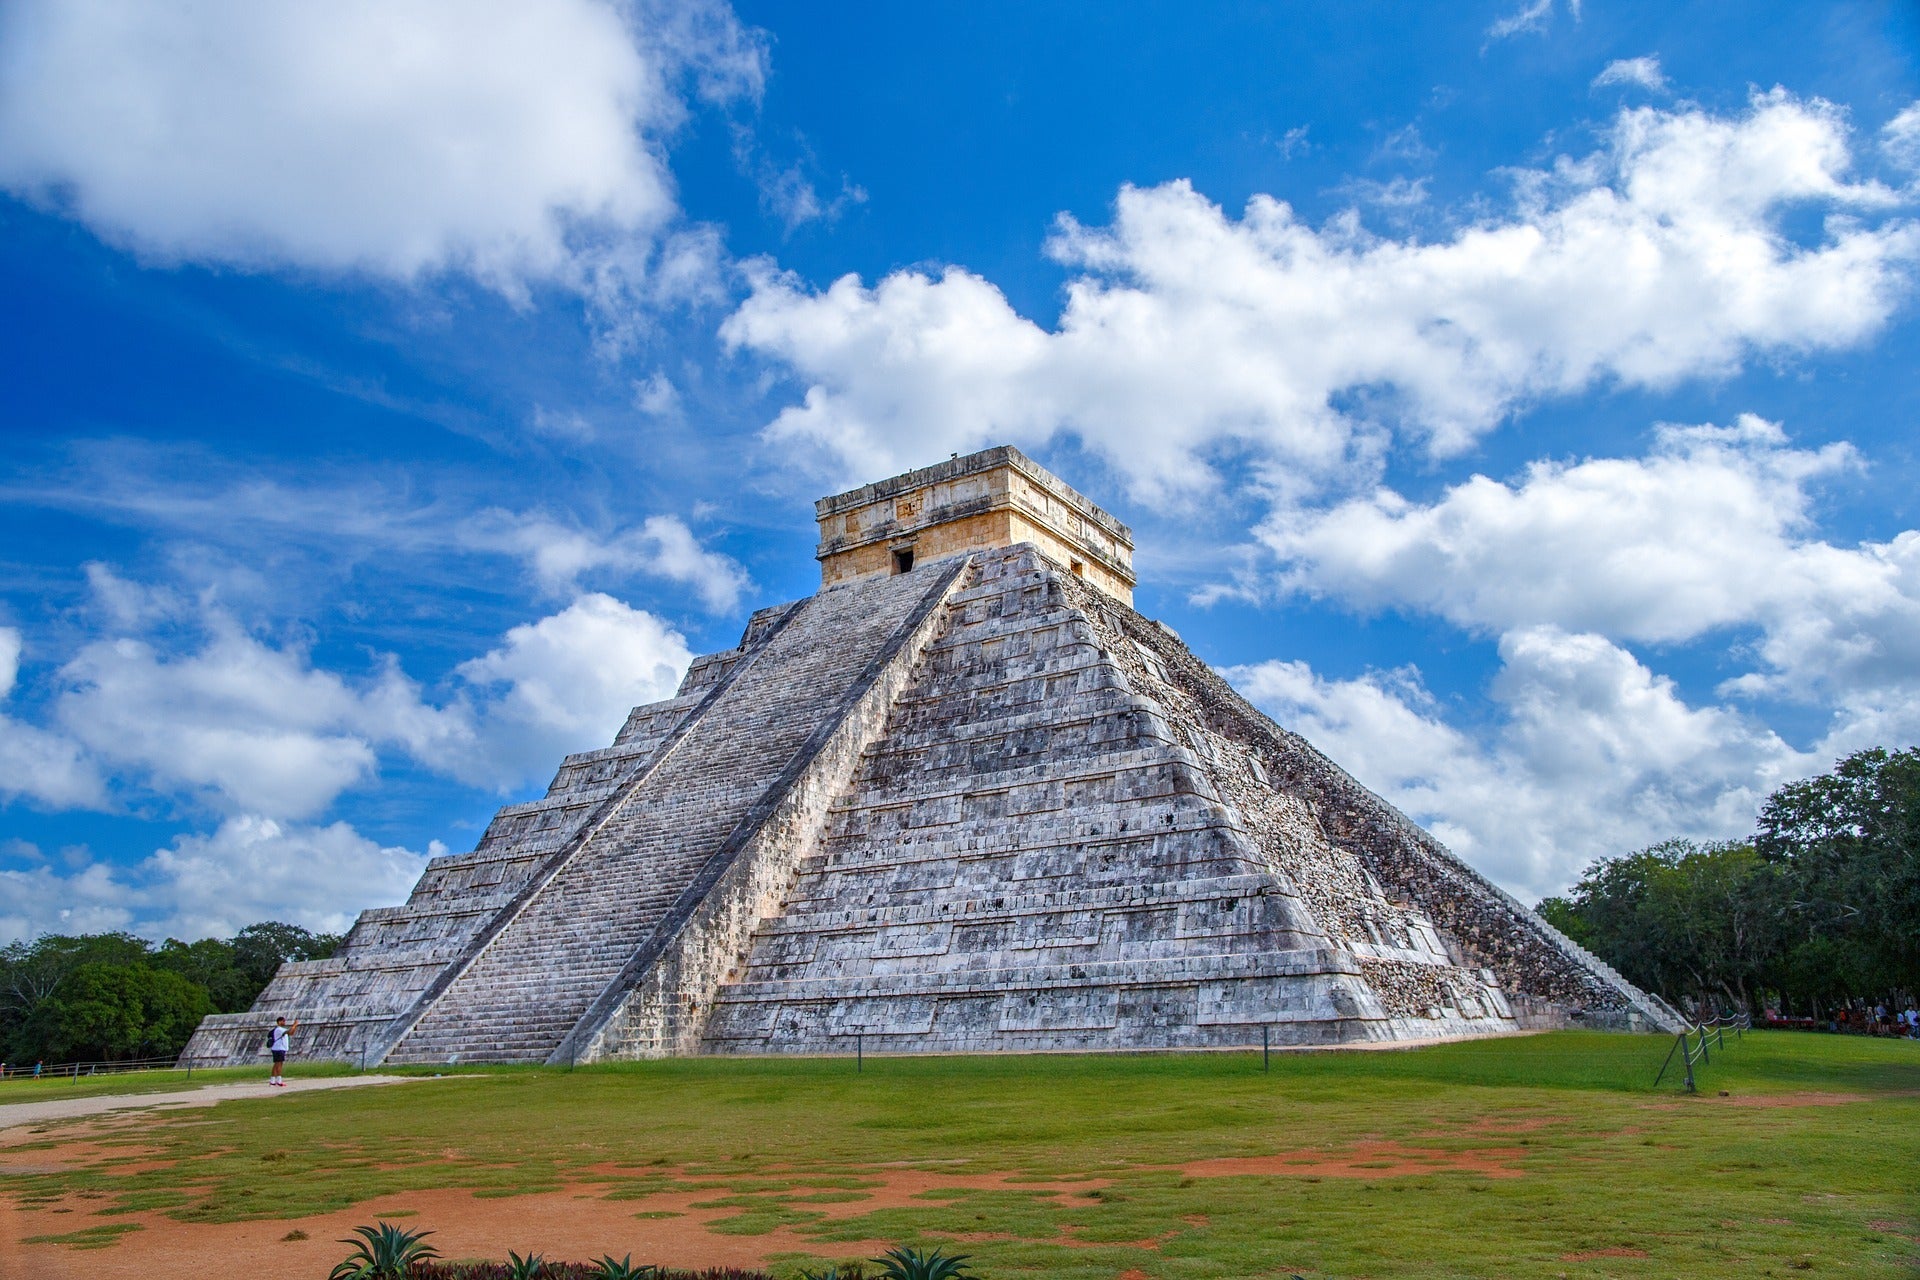 Excursão a Chichén Itzá e Yaxunah